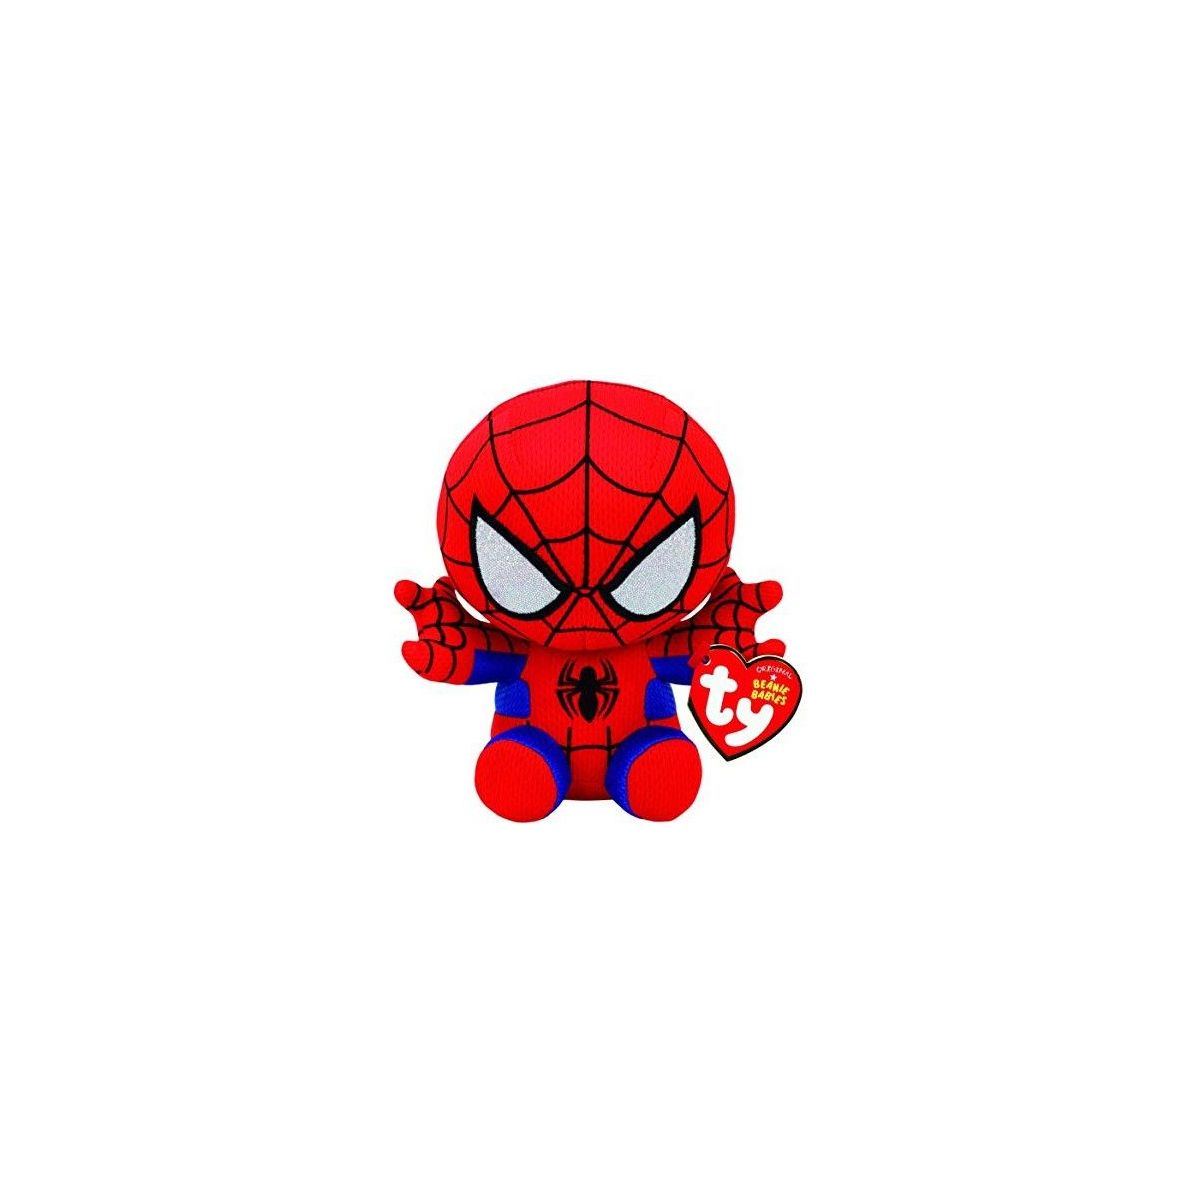 Pluszak Beanie Babies Marvel Spiderman [mm:] 150 Ty (TY41188)